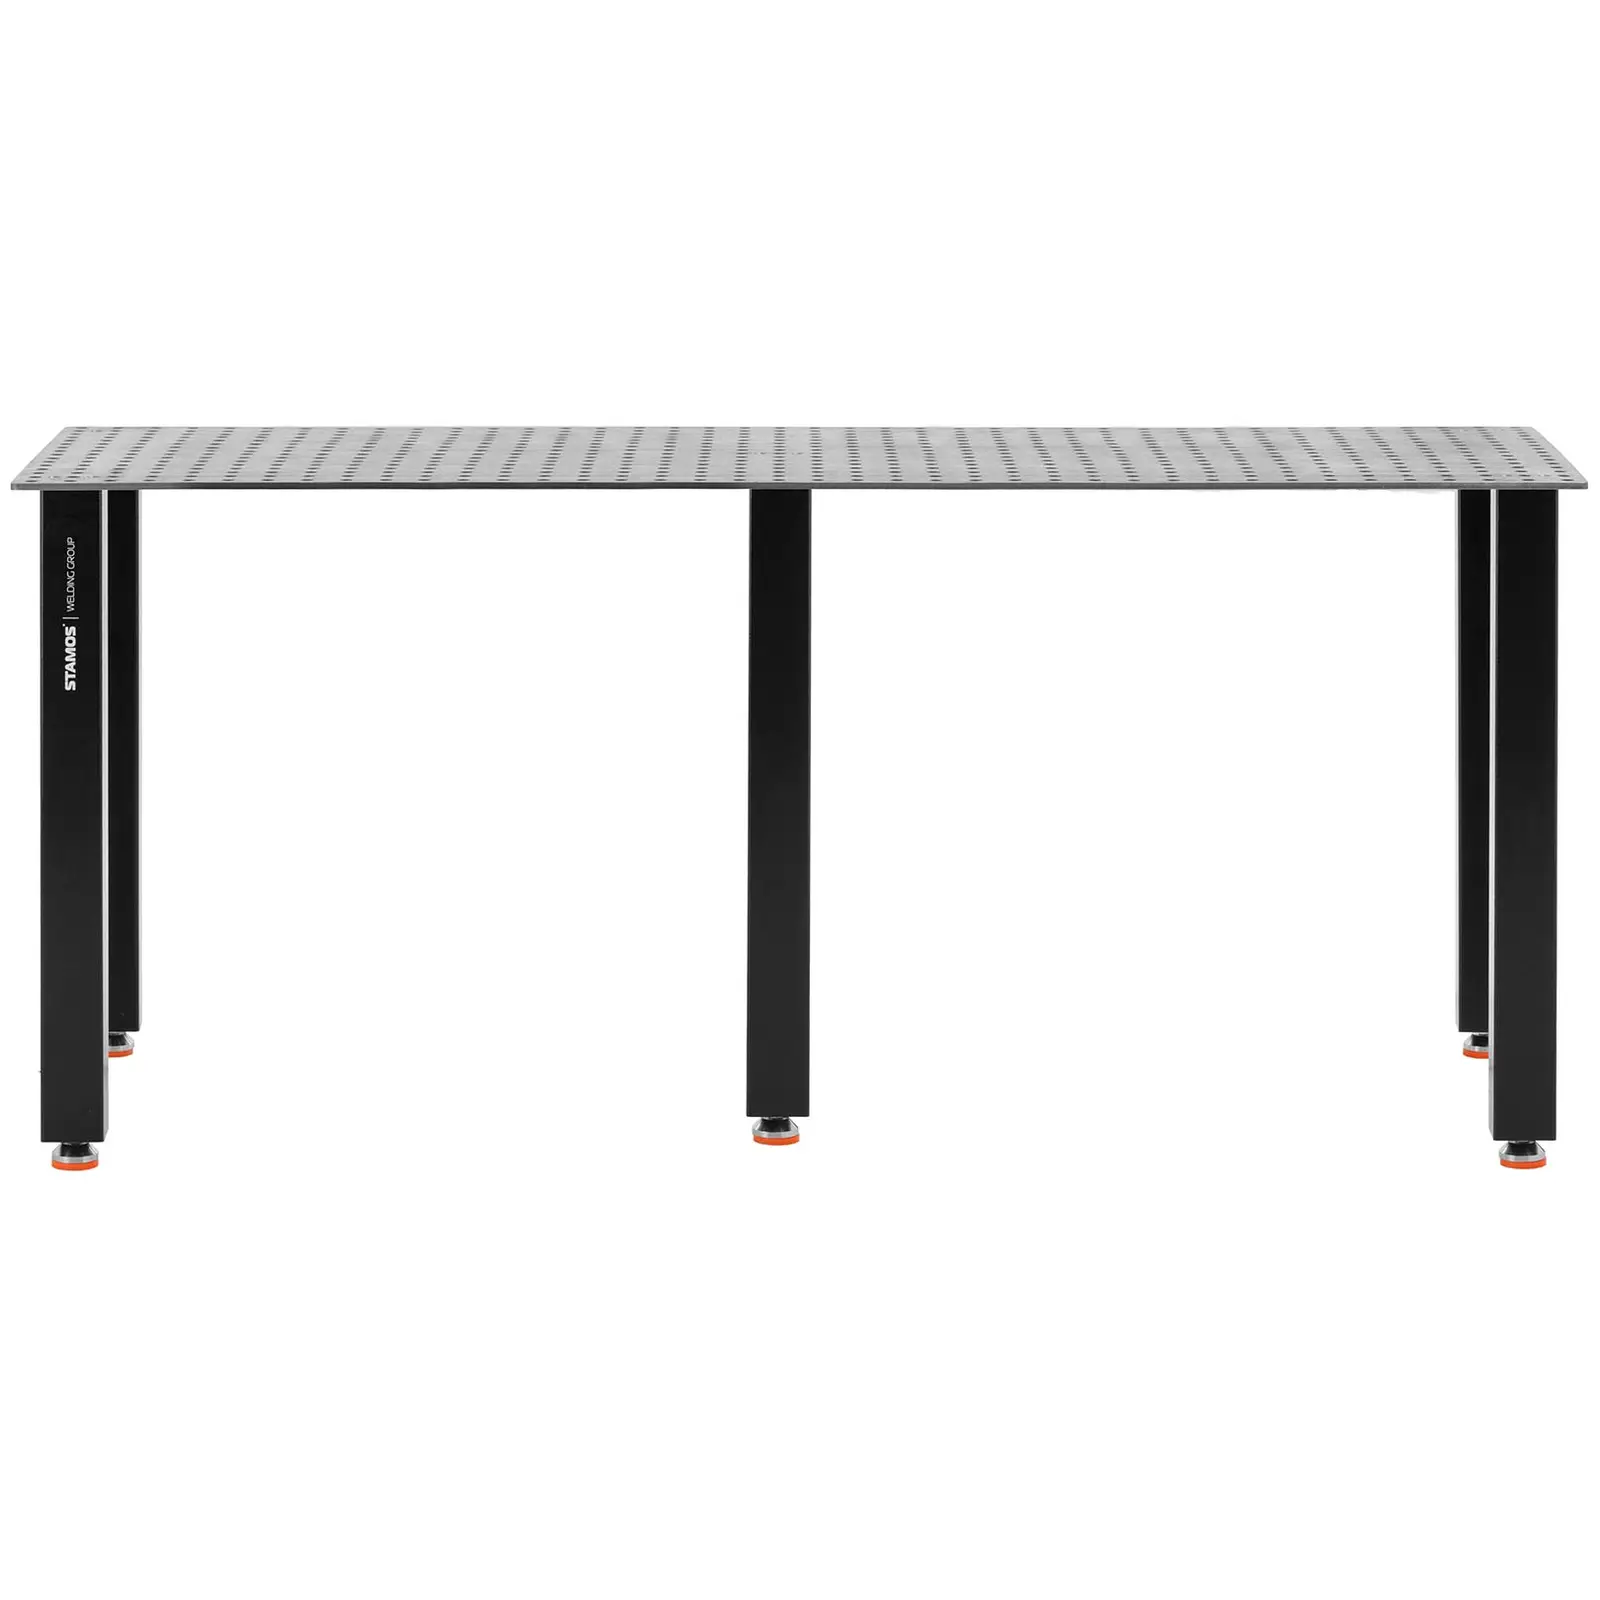 Welding Table - 250 kg - 200 x 100 cm